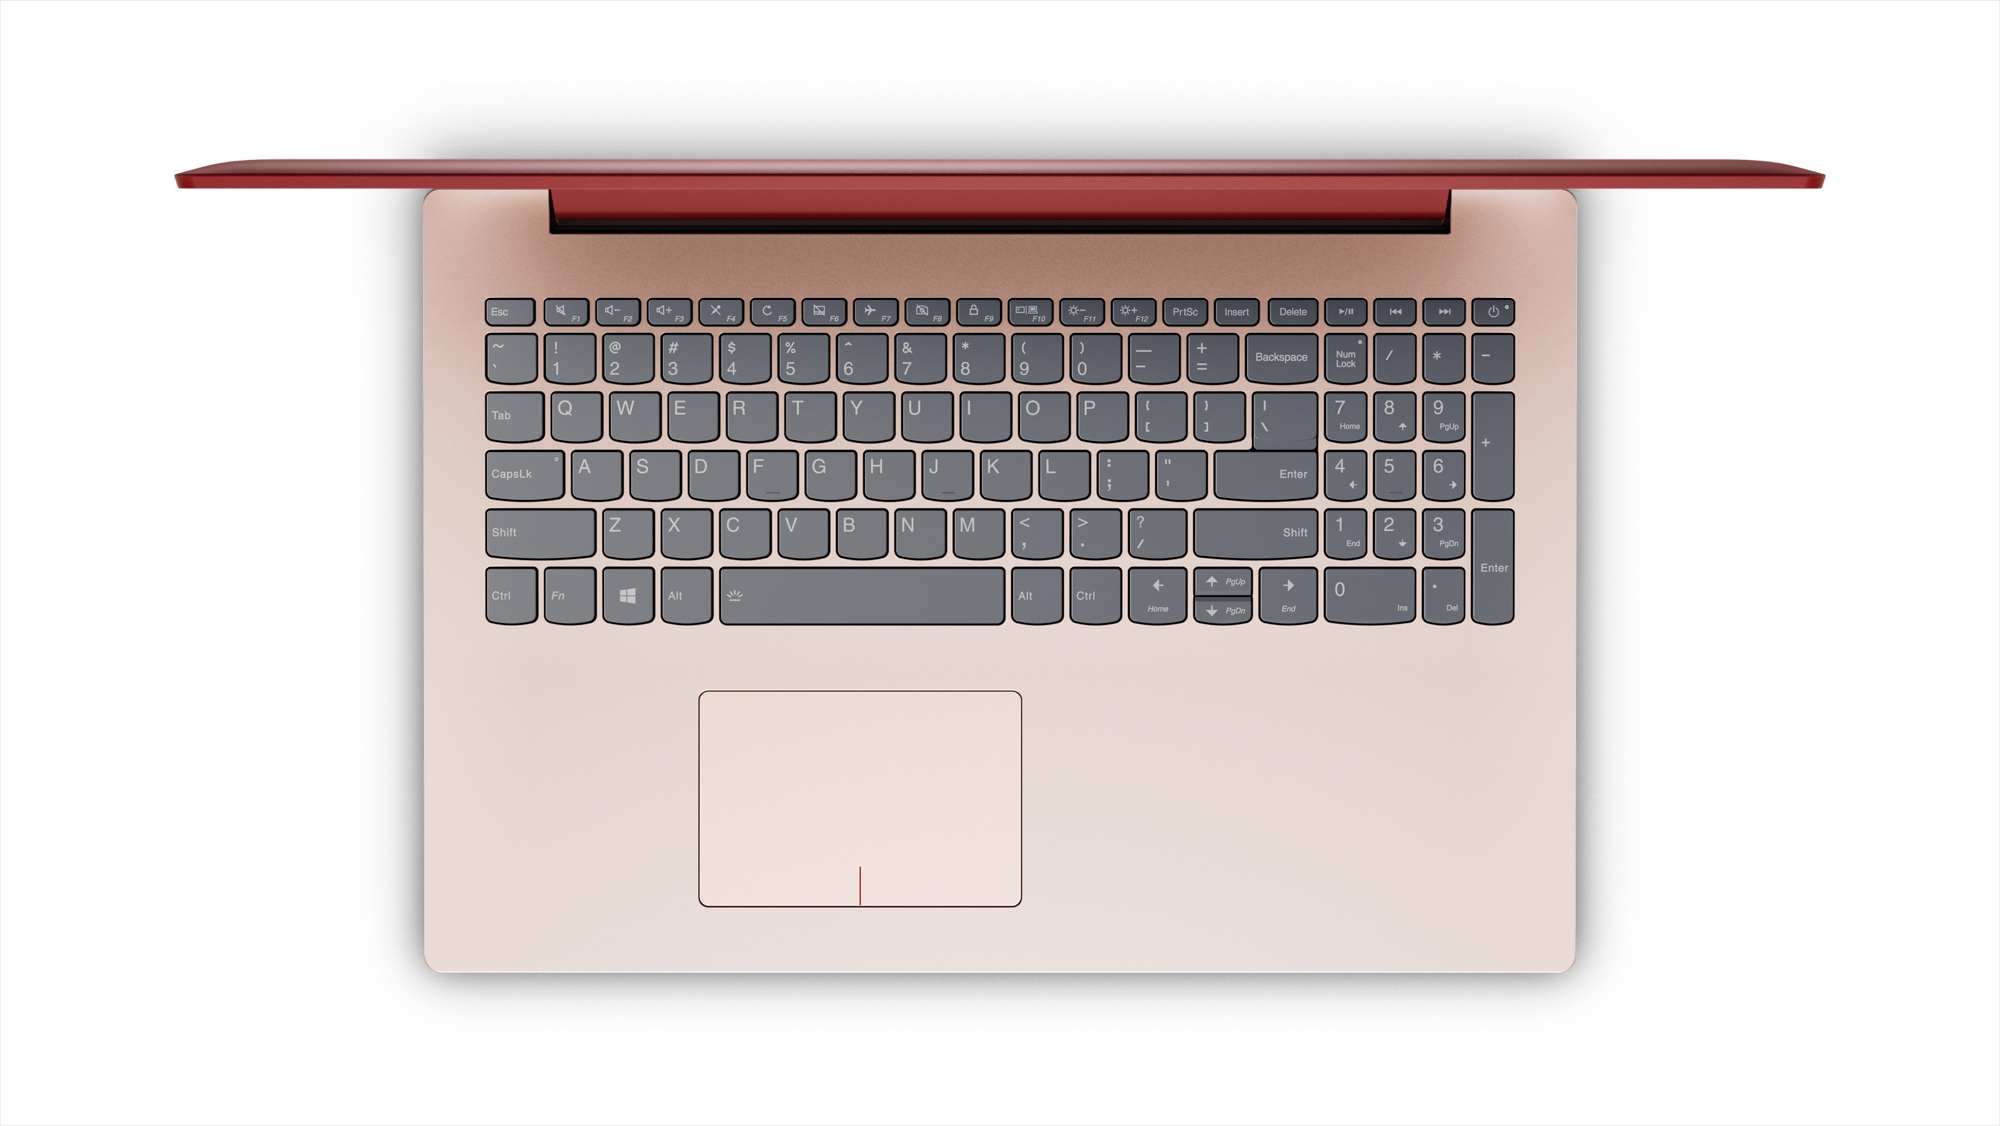 Lenovo 81DE00T0US ideapad 330 15.6" Laptop, Intel Core i3-8130U, 4GB RAM, 1TB HDD, Win 10, Coral Red - image 3 of 6